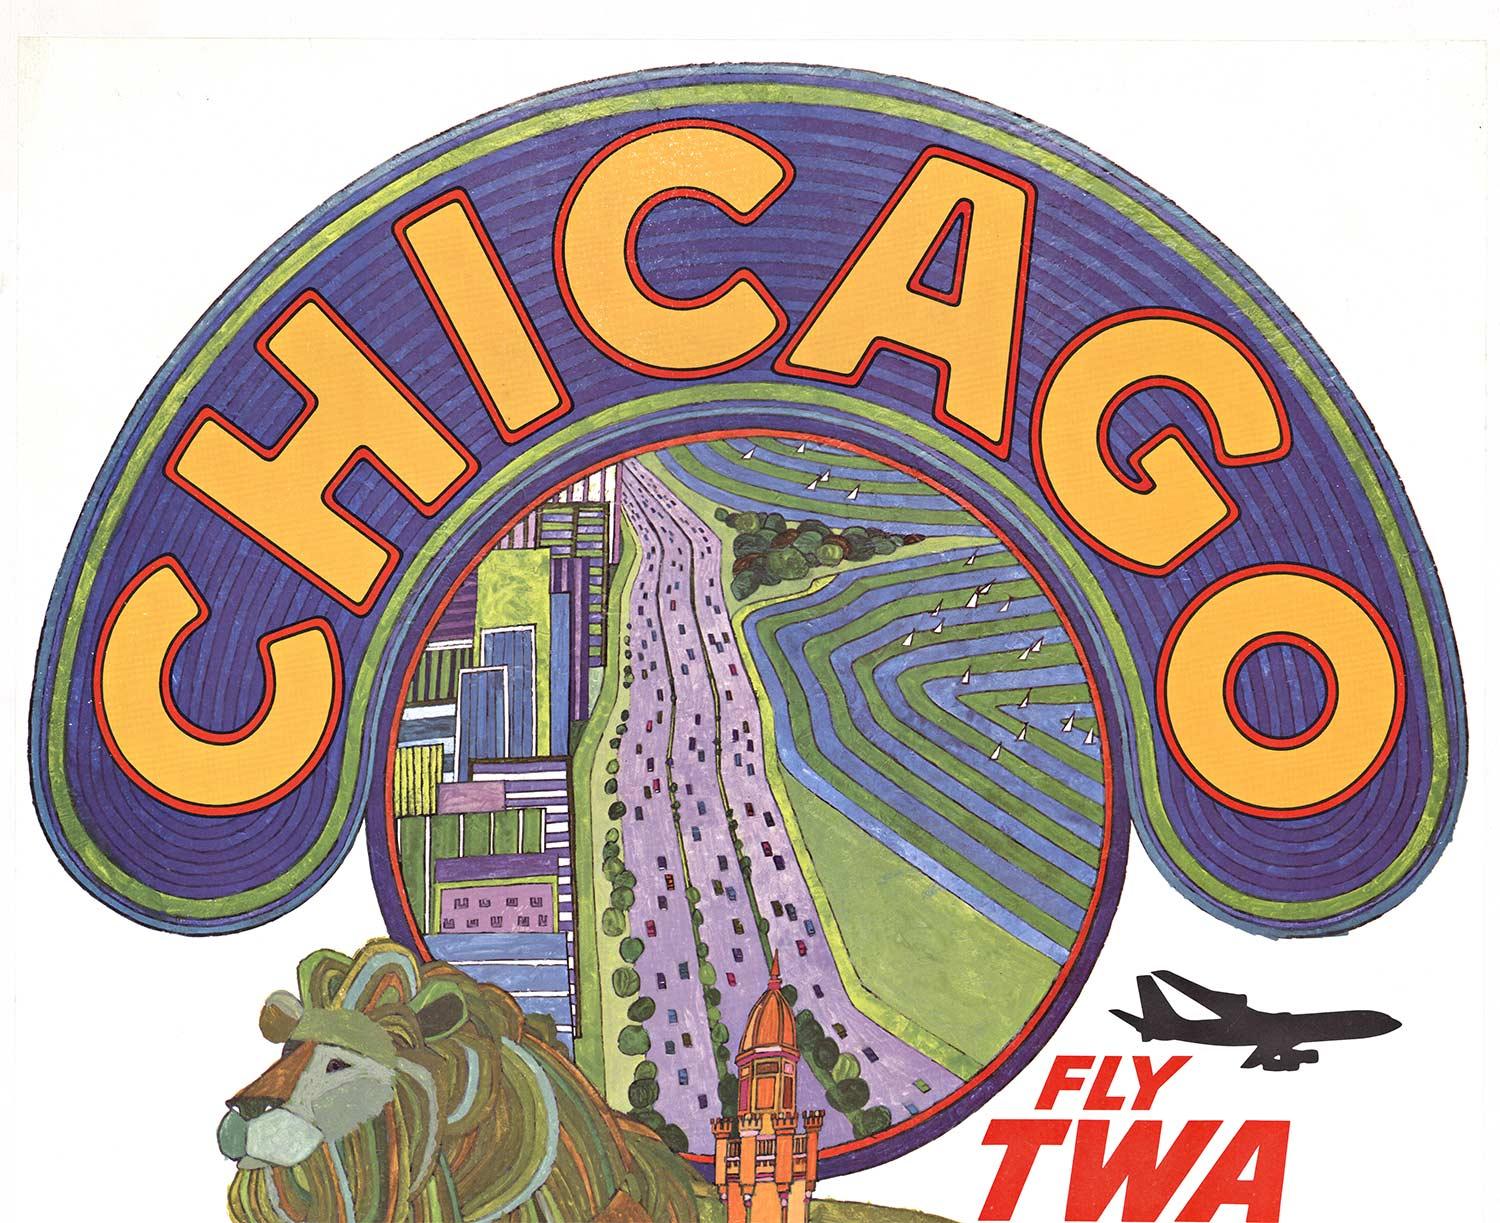 Affiche de voyage vintage originale de Chicago Fly TWA - Print de David Klein